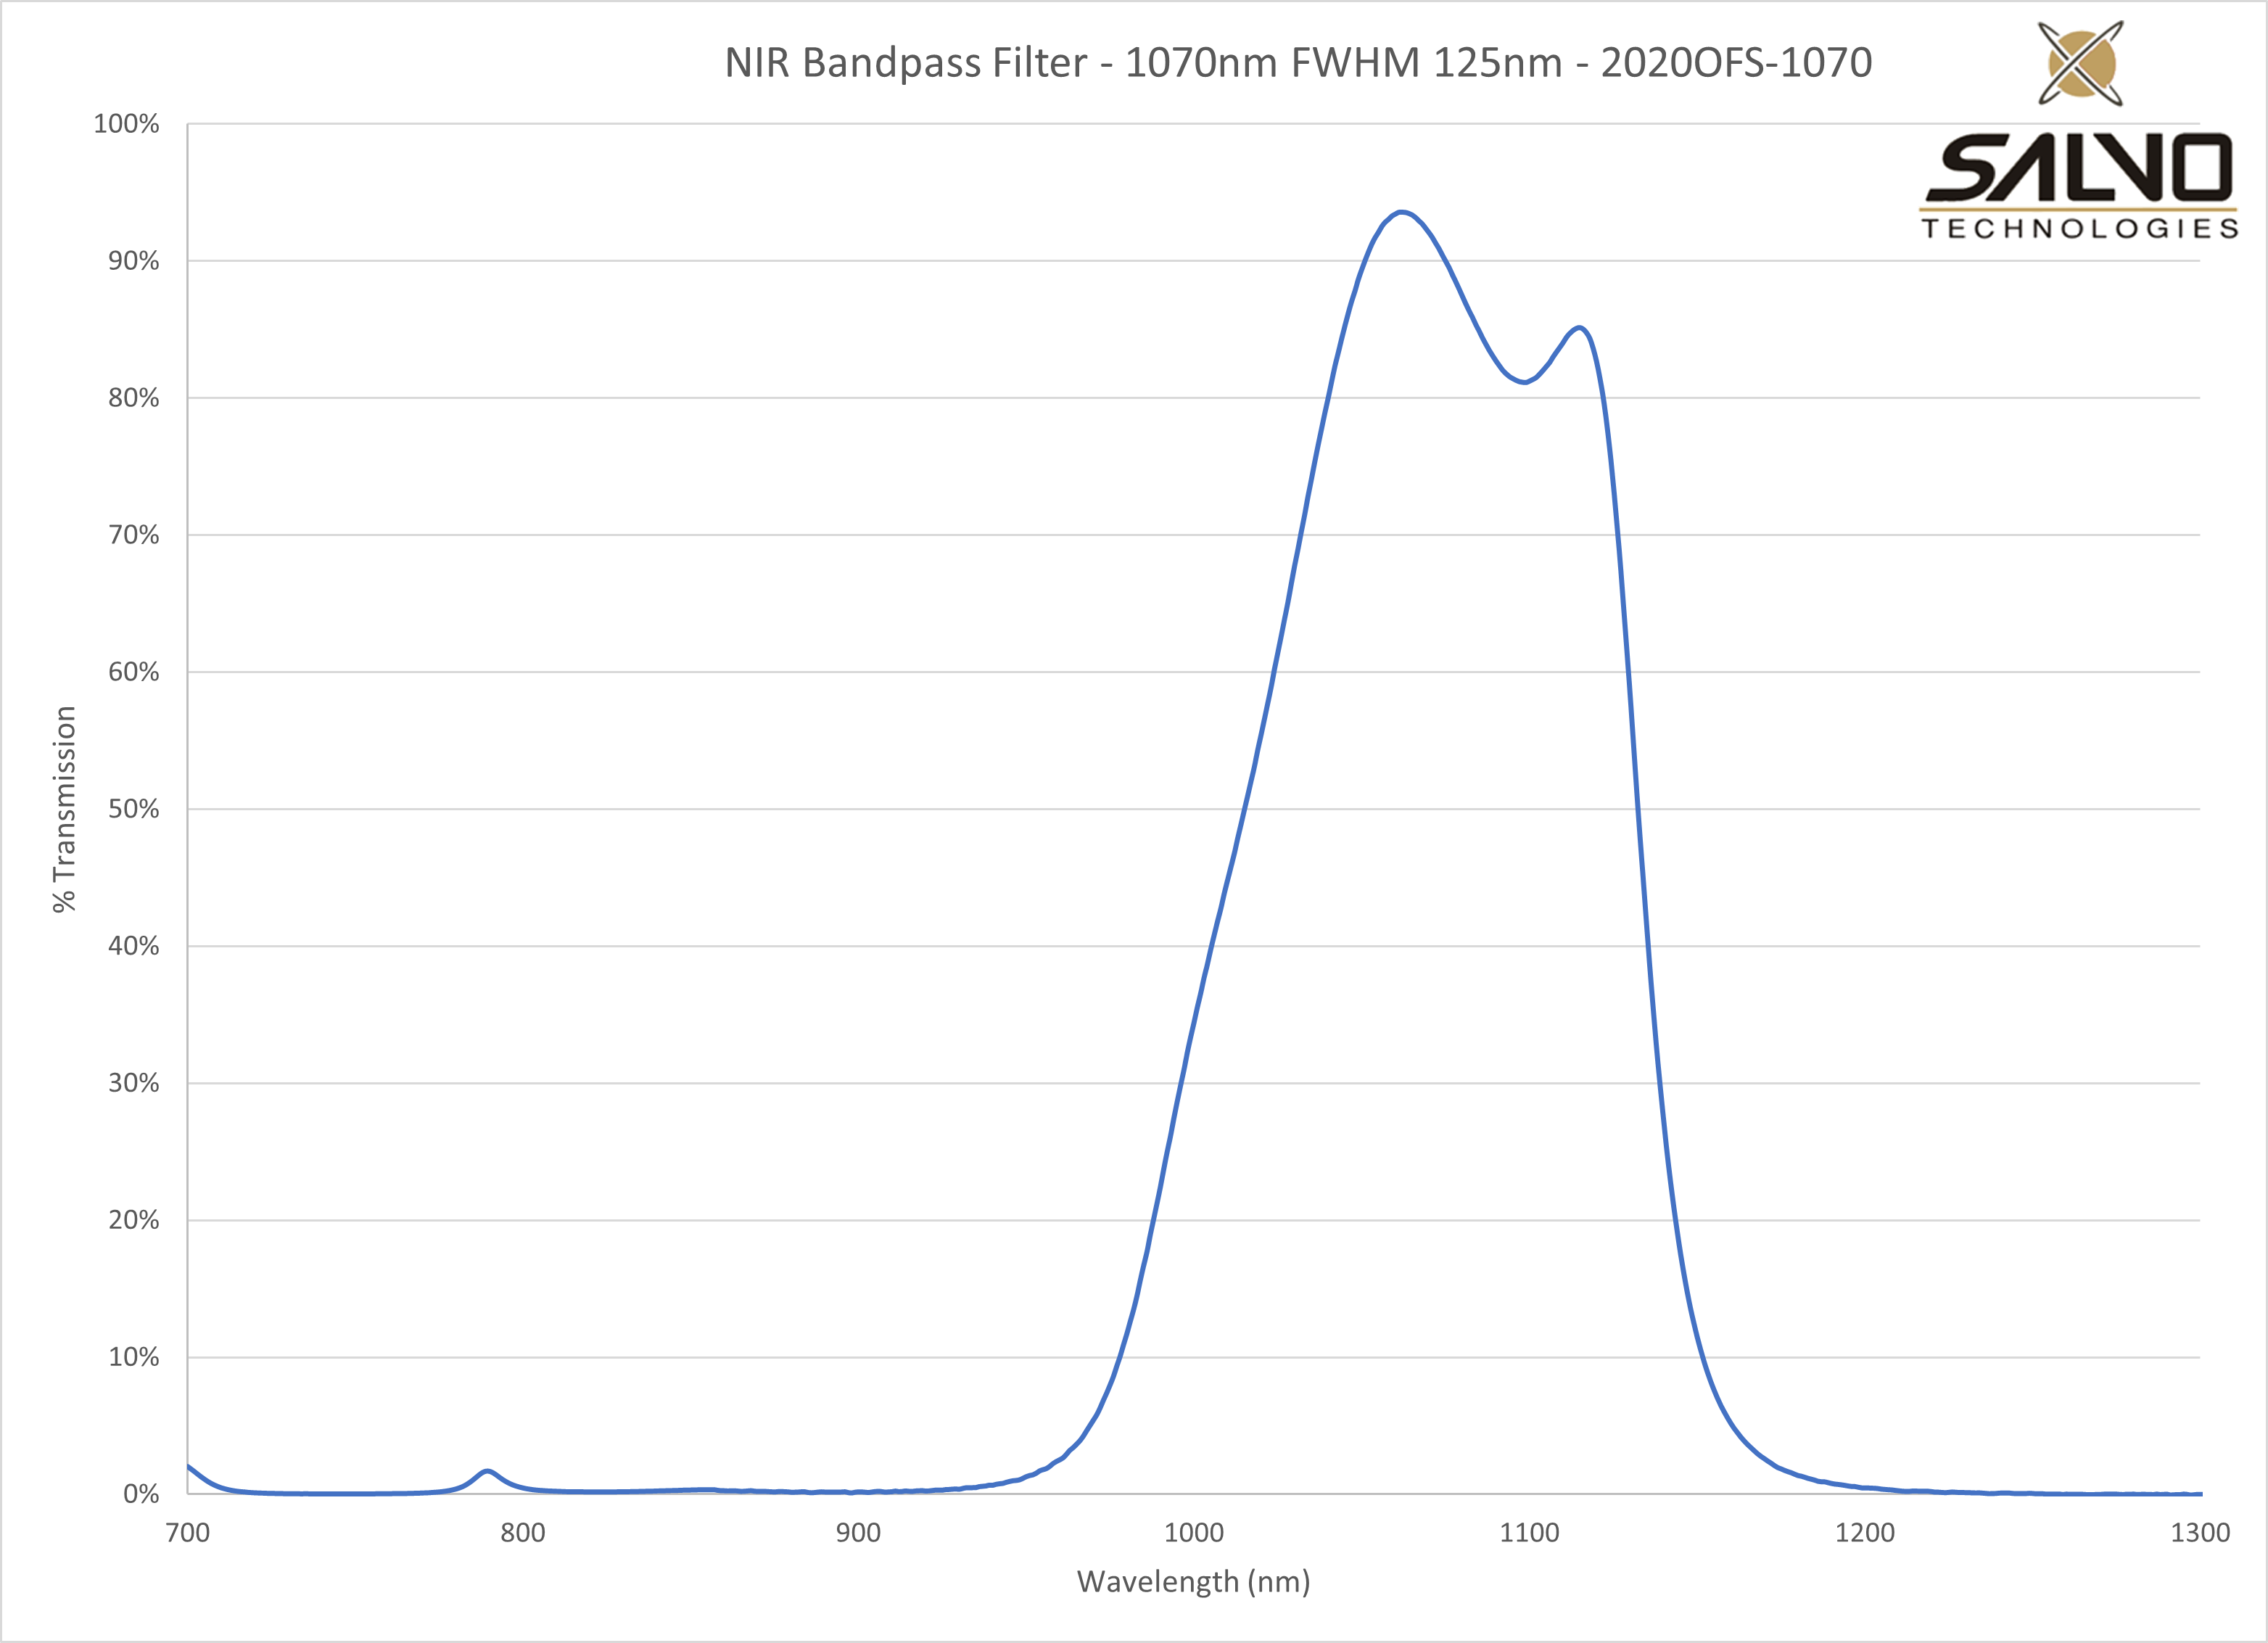 NIR Bandpass Filter - 1070nm FWHM 125nm - 2020OFS-1070